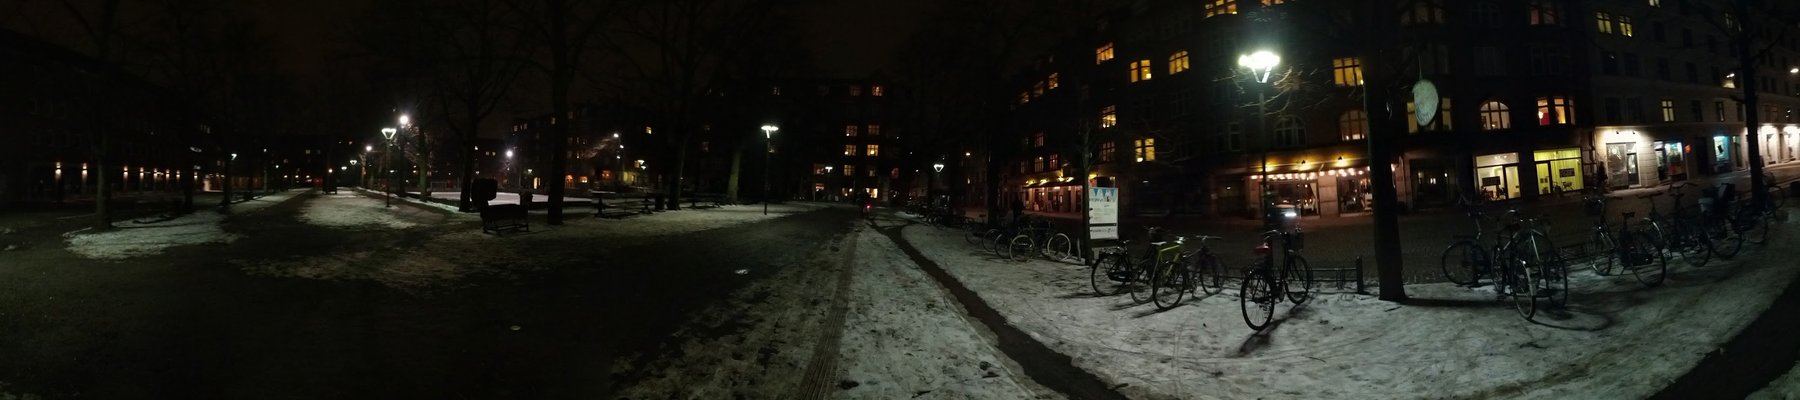 A Public Square at Night